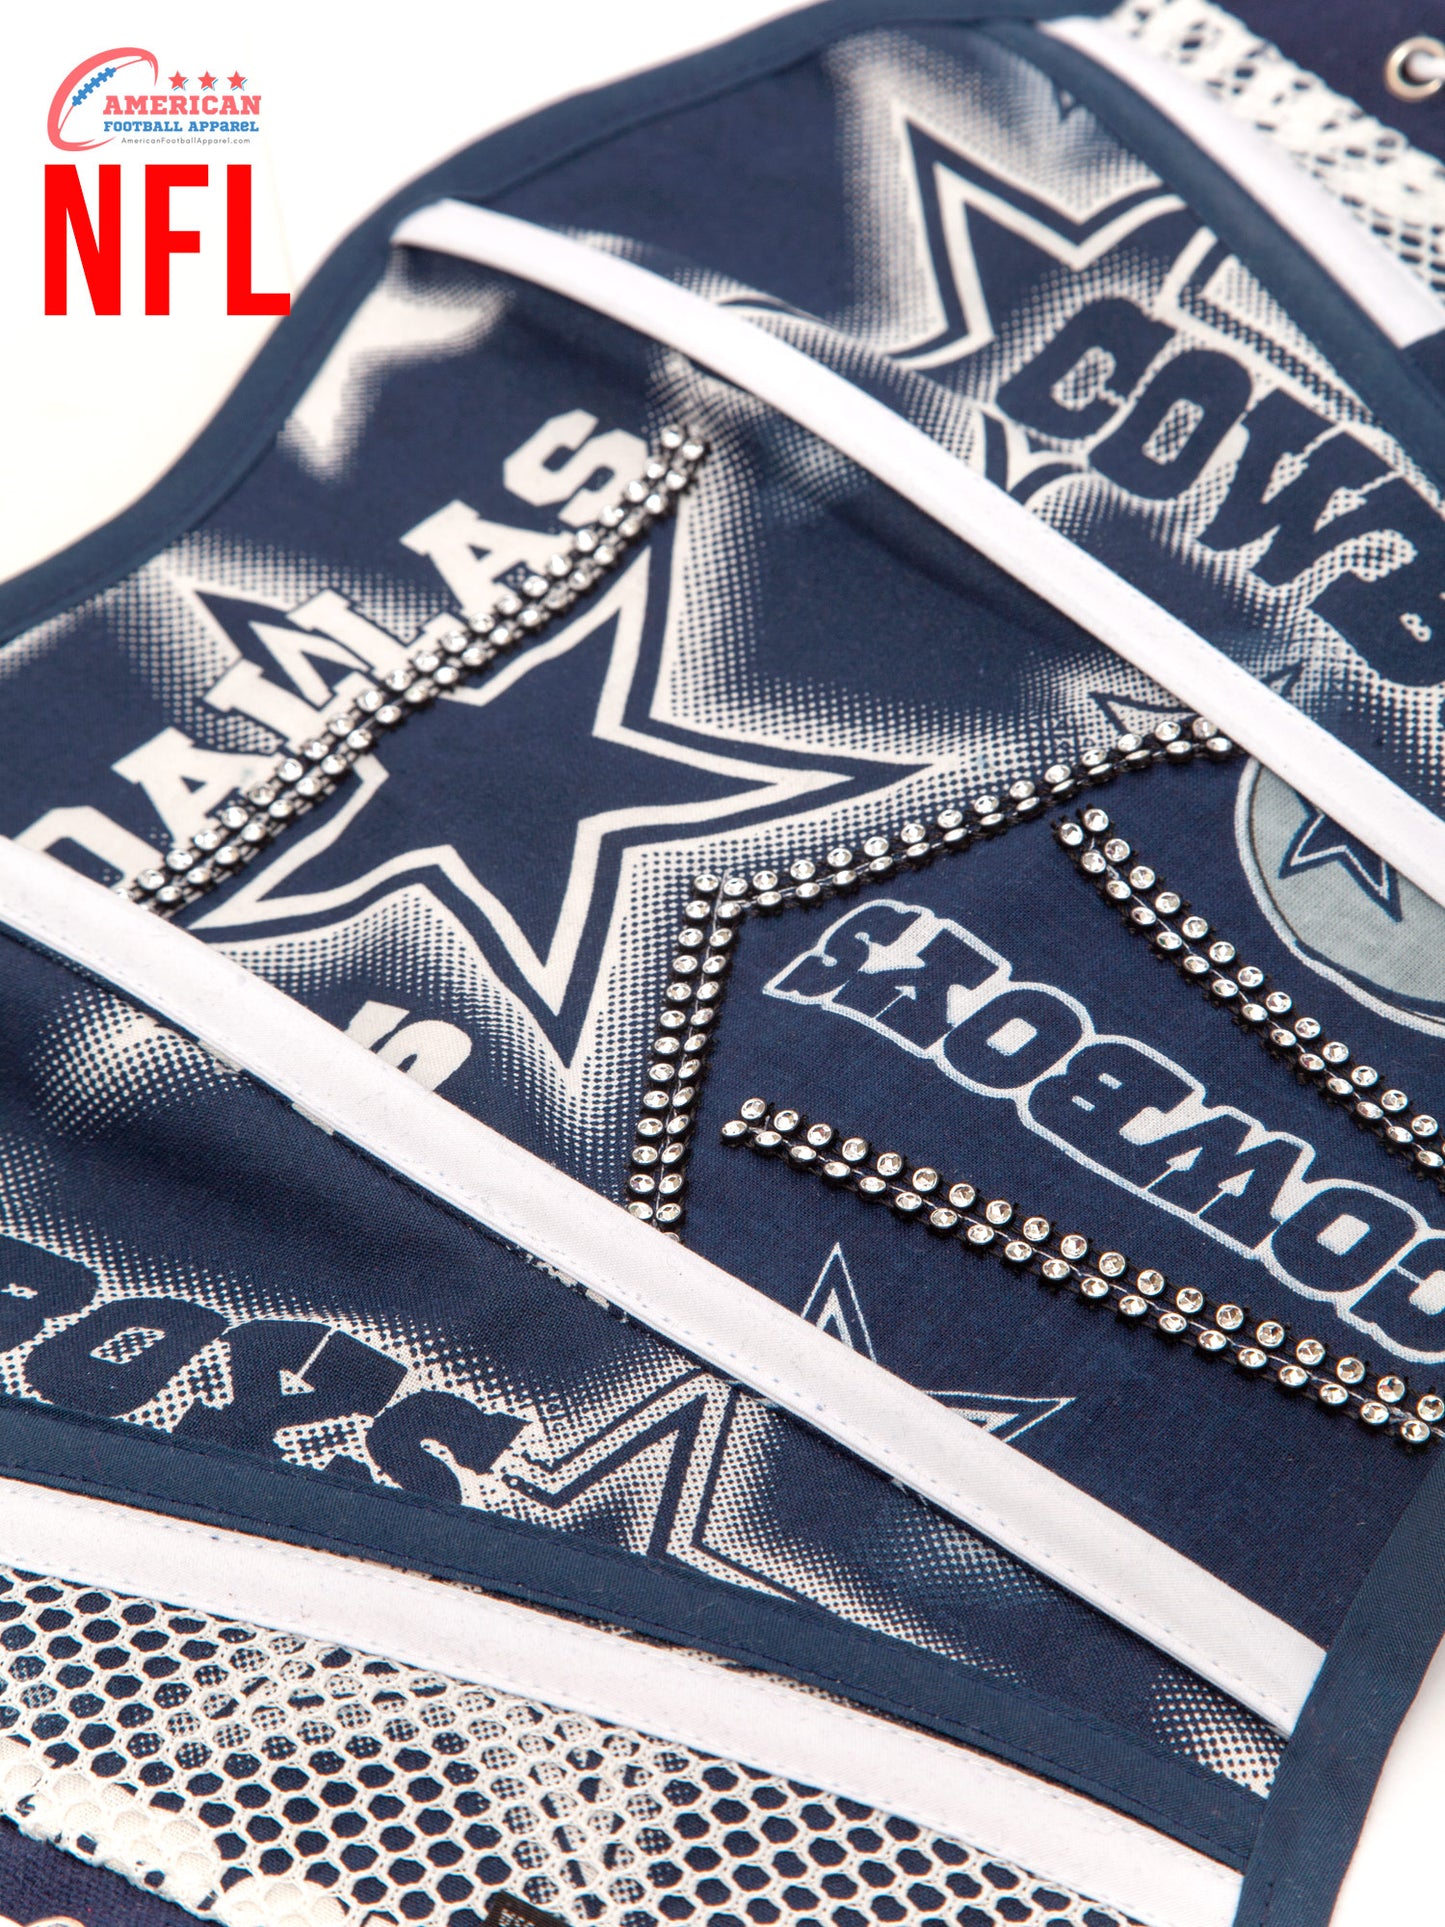 NFL Dallas Cowboys Football Team Corset Bustier Top